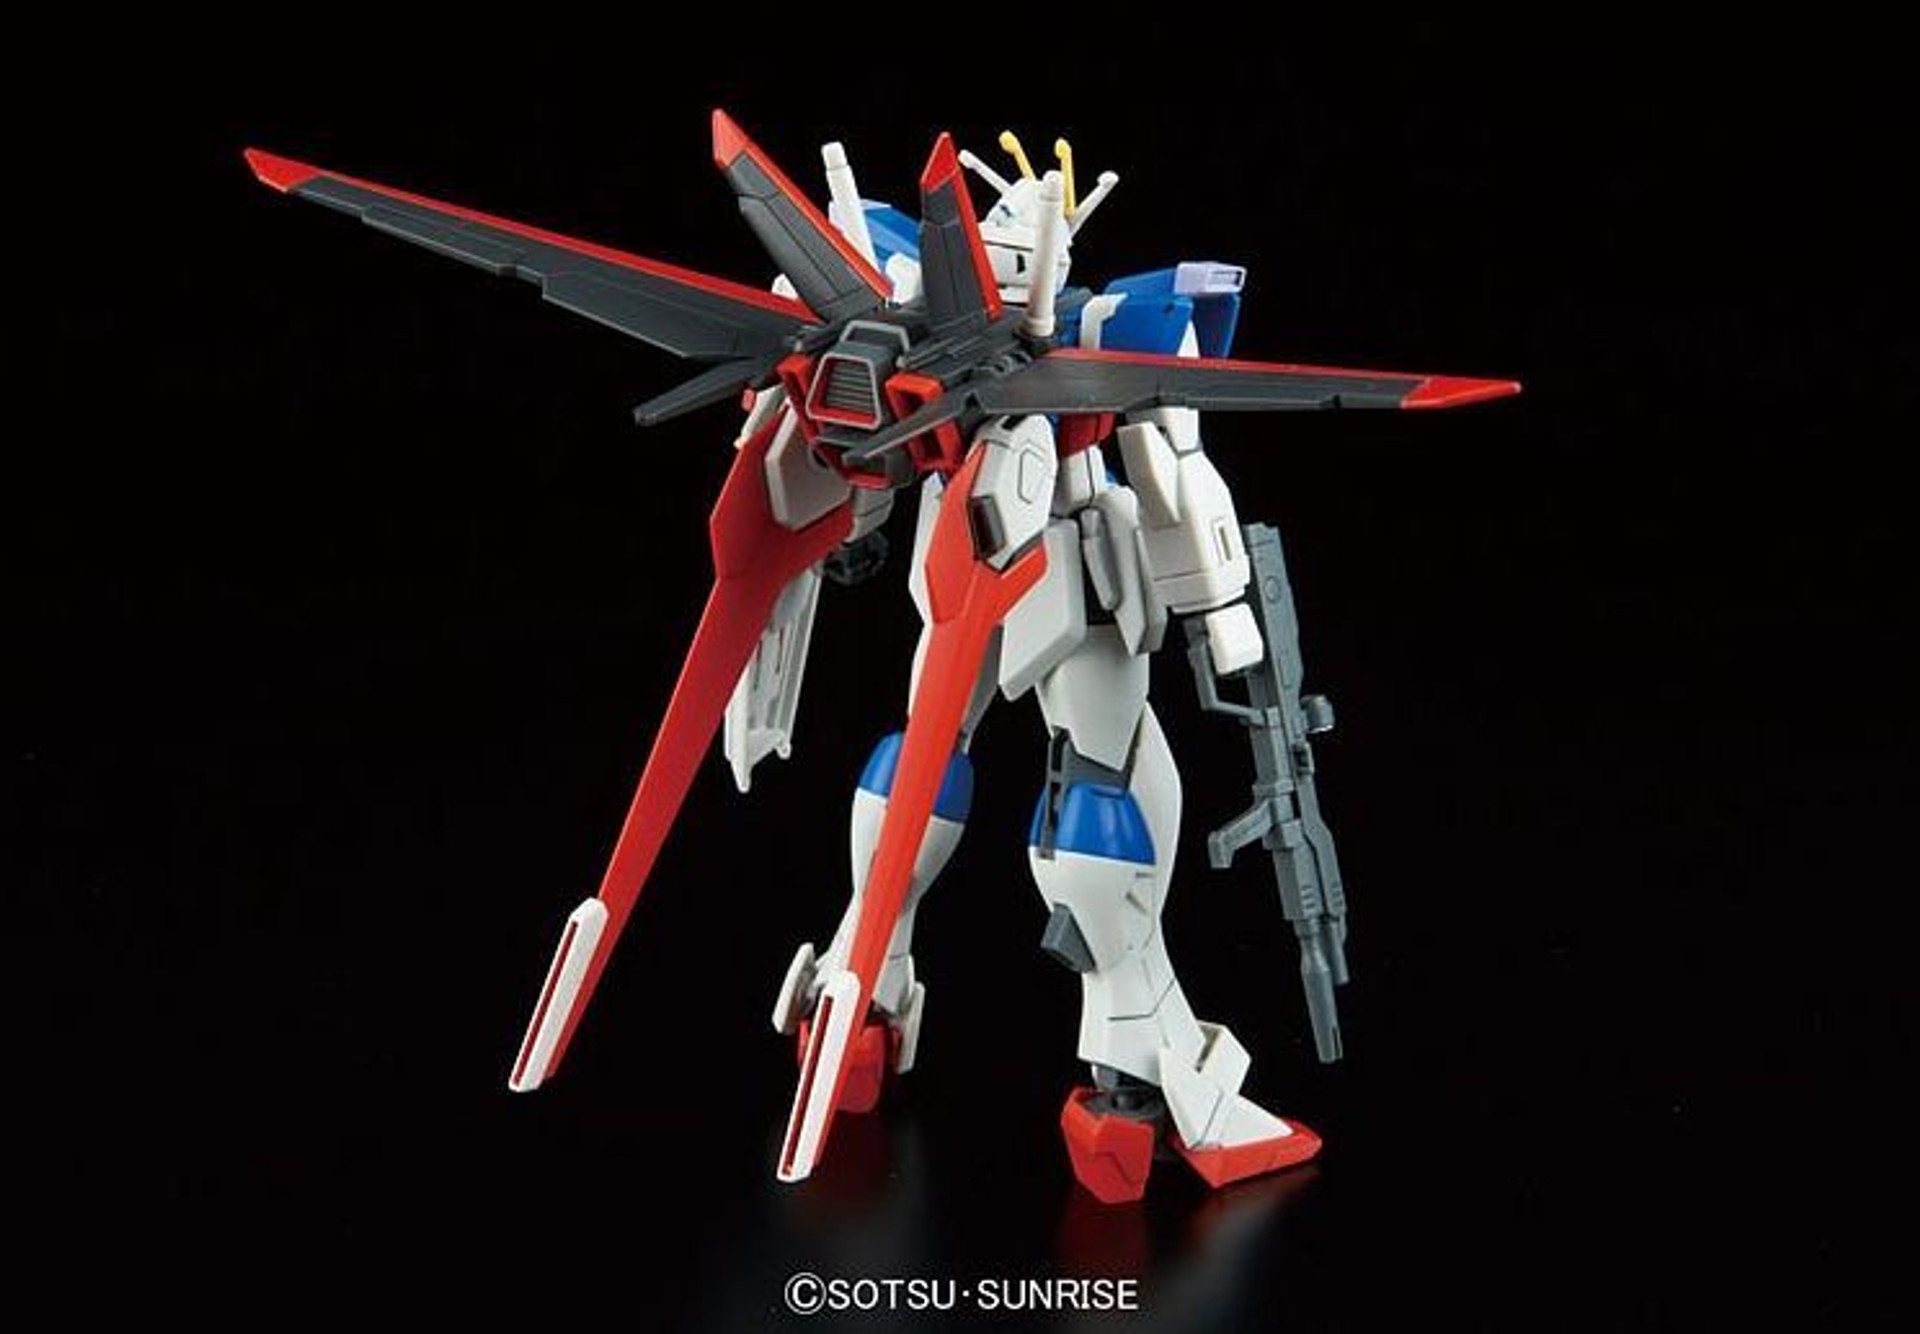 1/144 HGCE ZGMF-X56/a Gundam Force Impulse - Japan Cool - Gundam Model ...